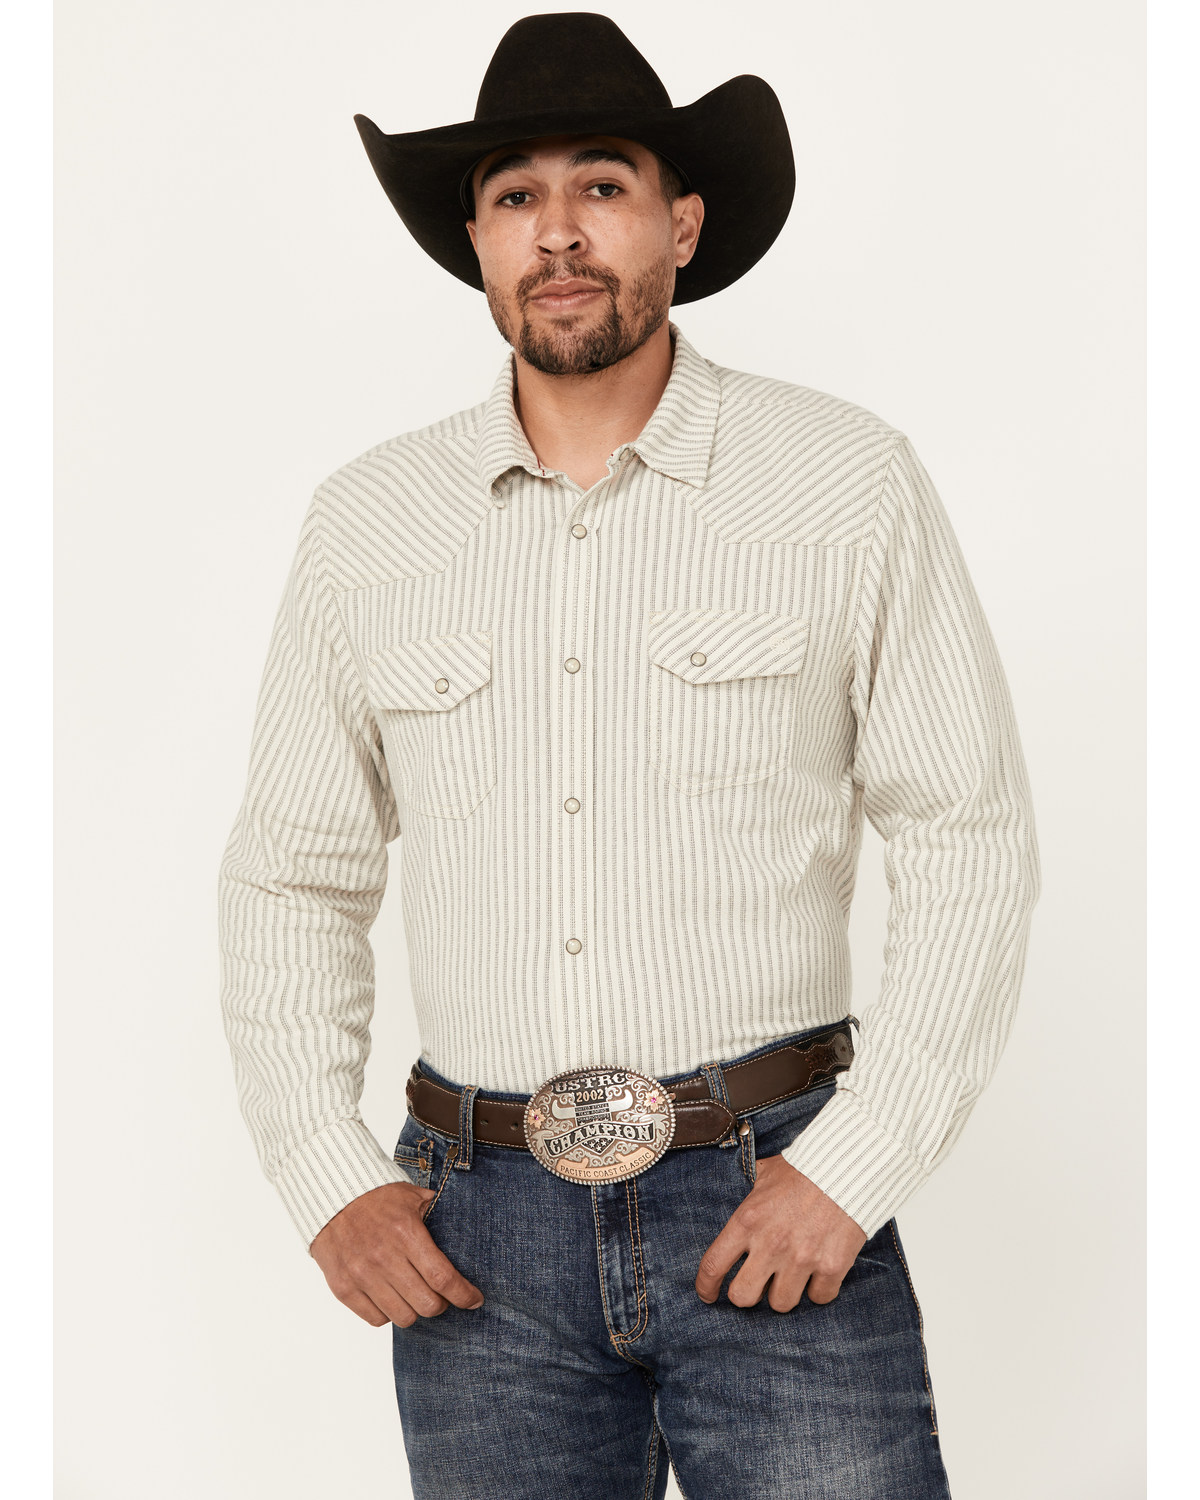 Blue Ranchwear Men's Boone Striped Long Sleeve Snap Shirt